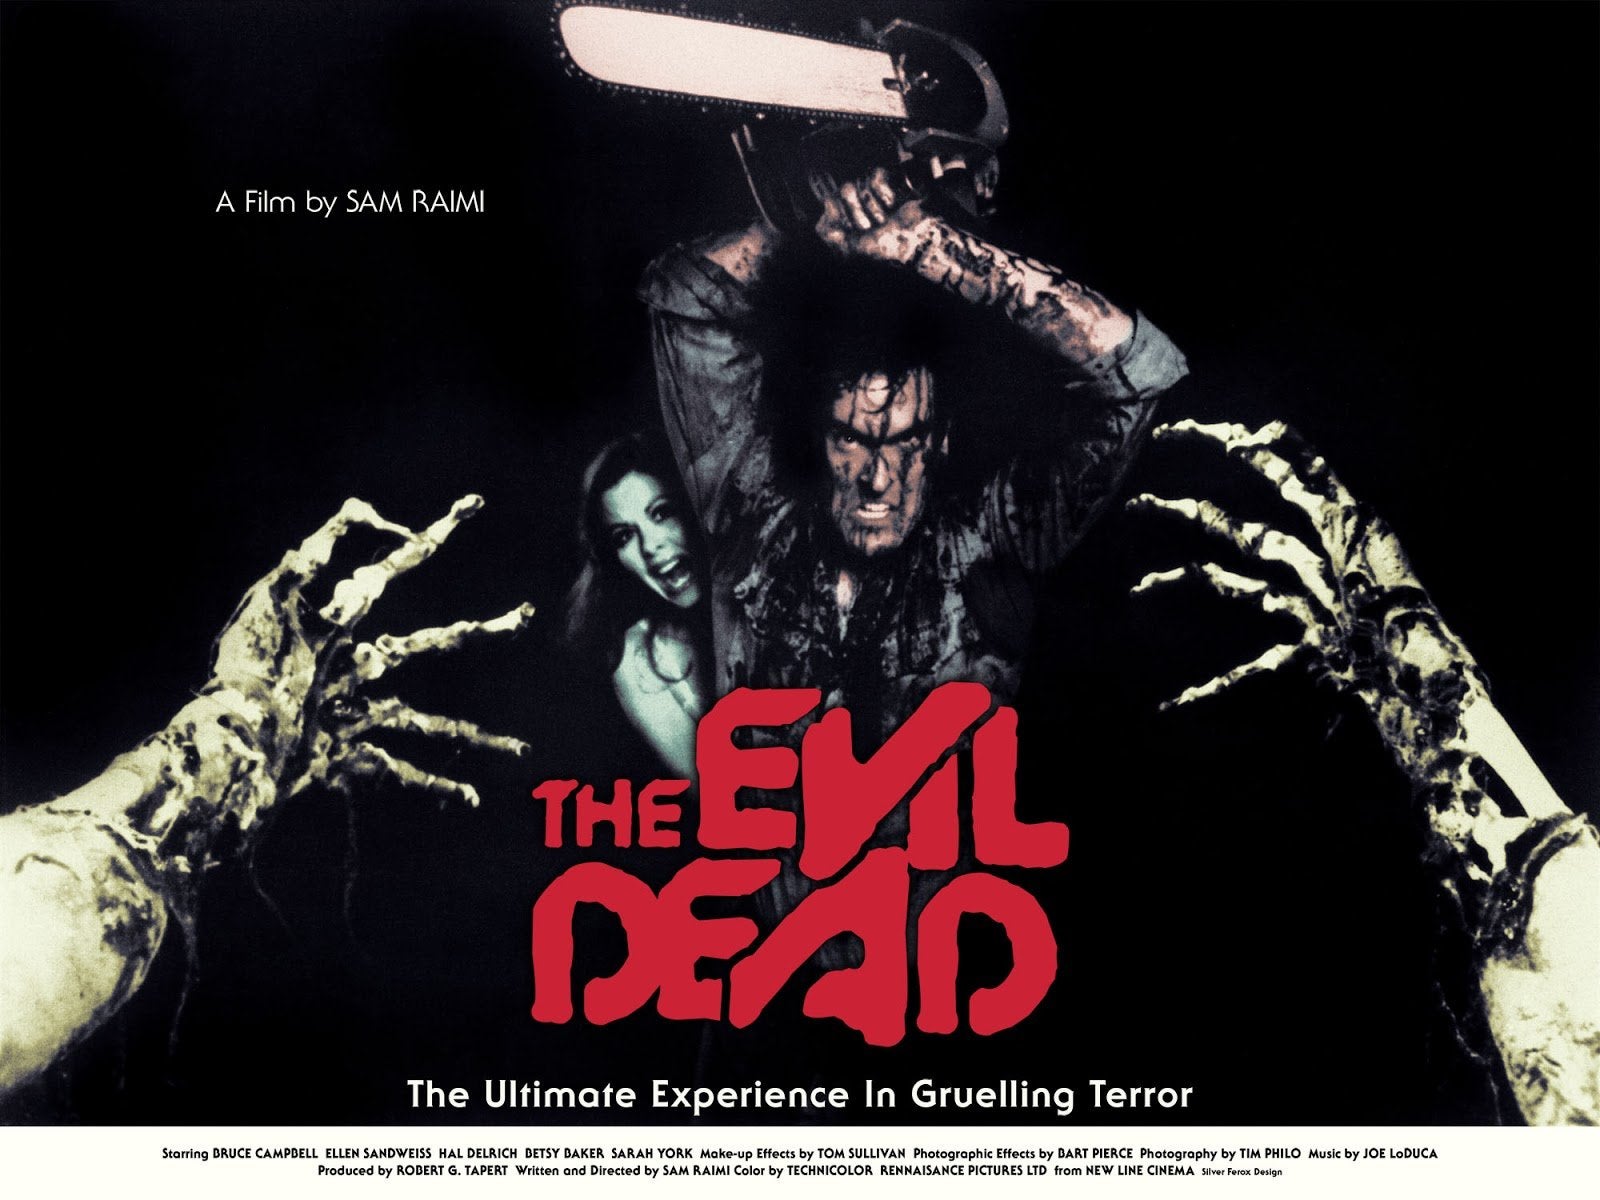 Evil Dead (1981) Director: Sam Raimi Writer: Sam Raimi Director of